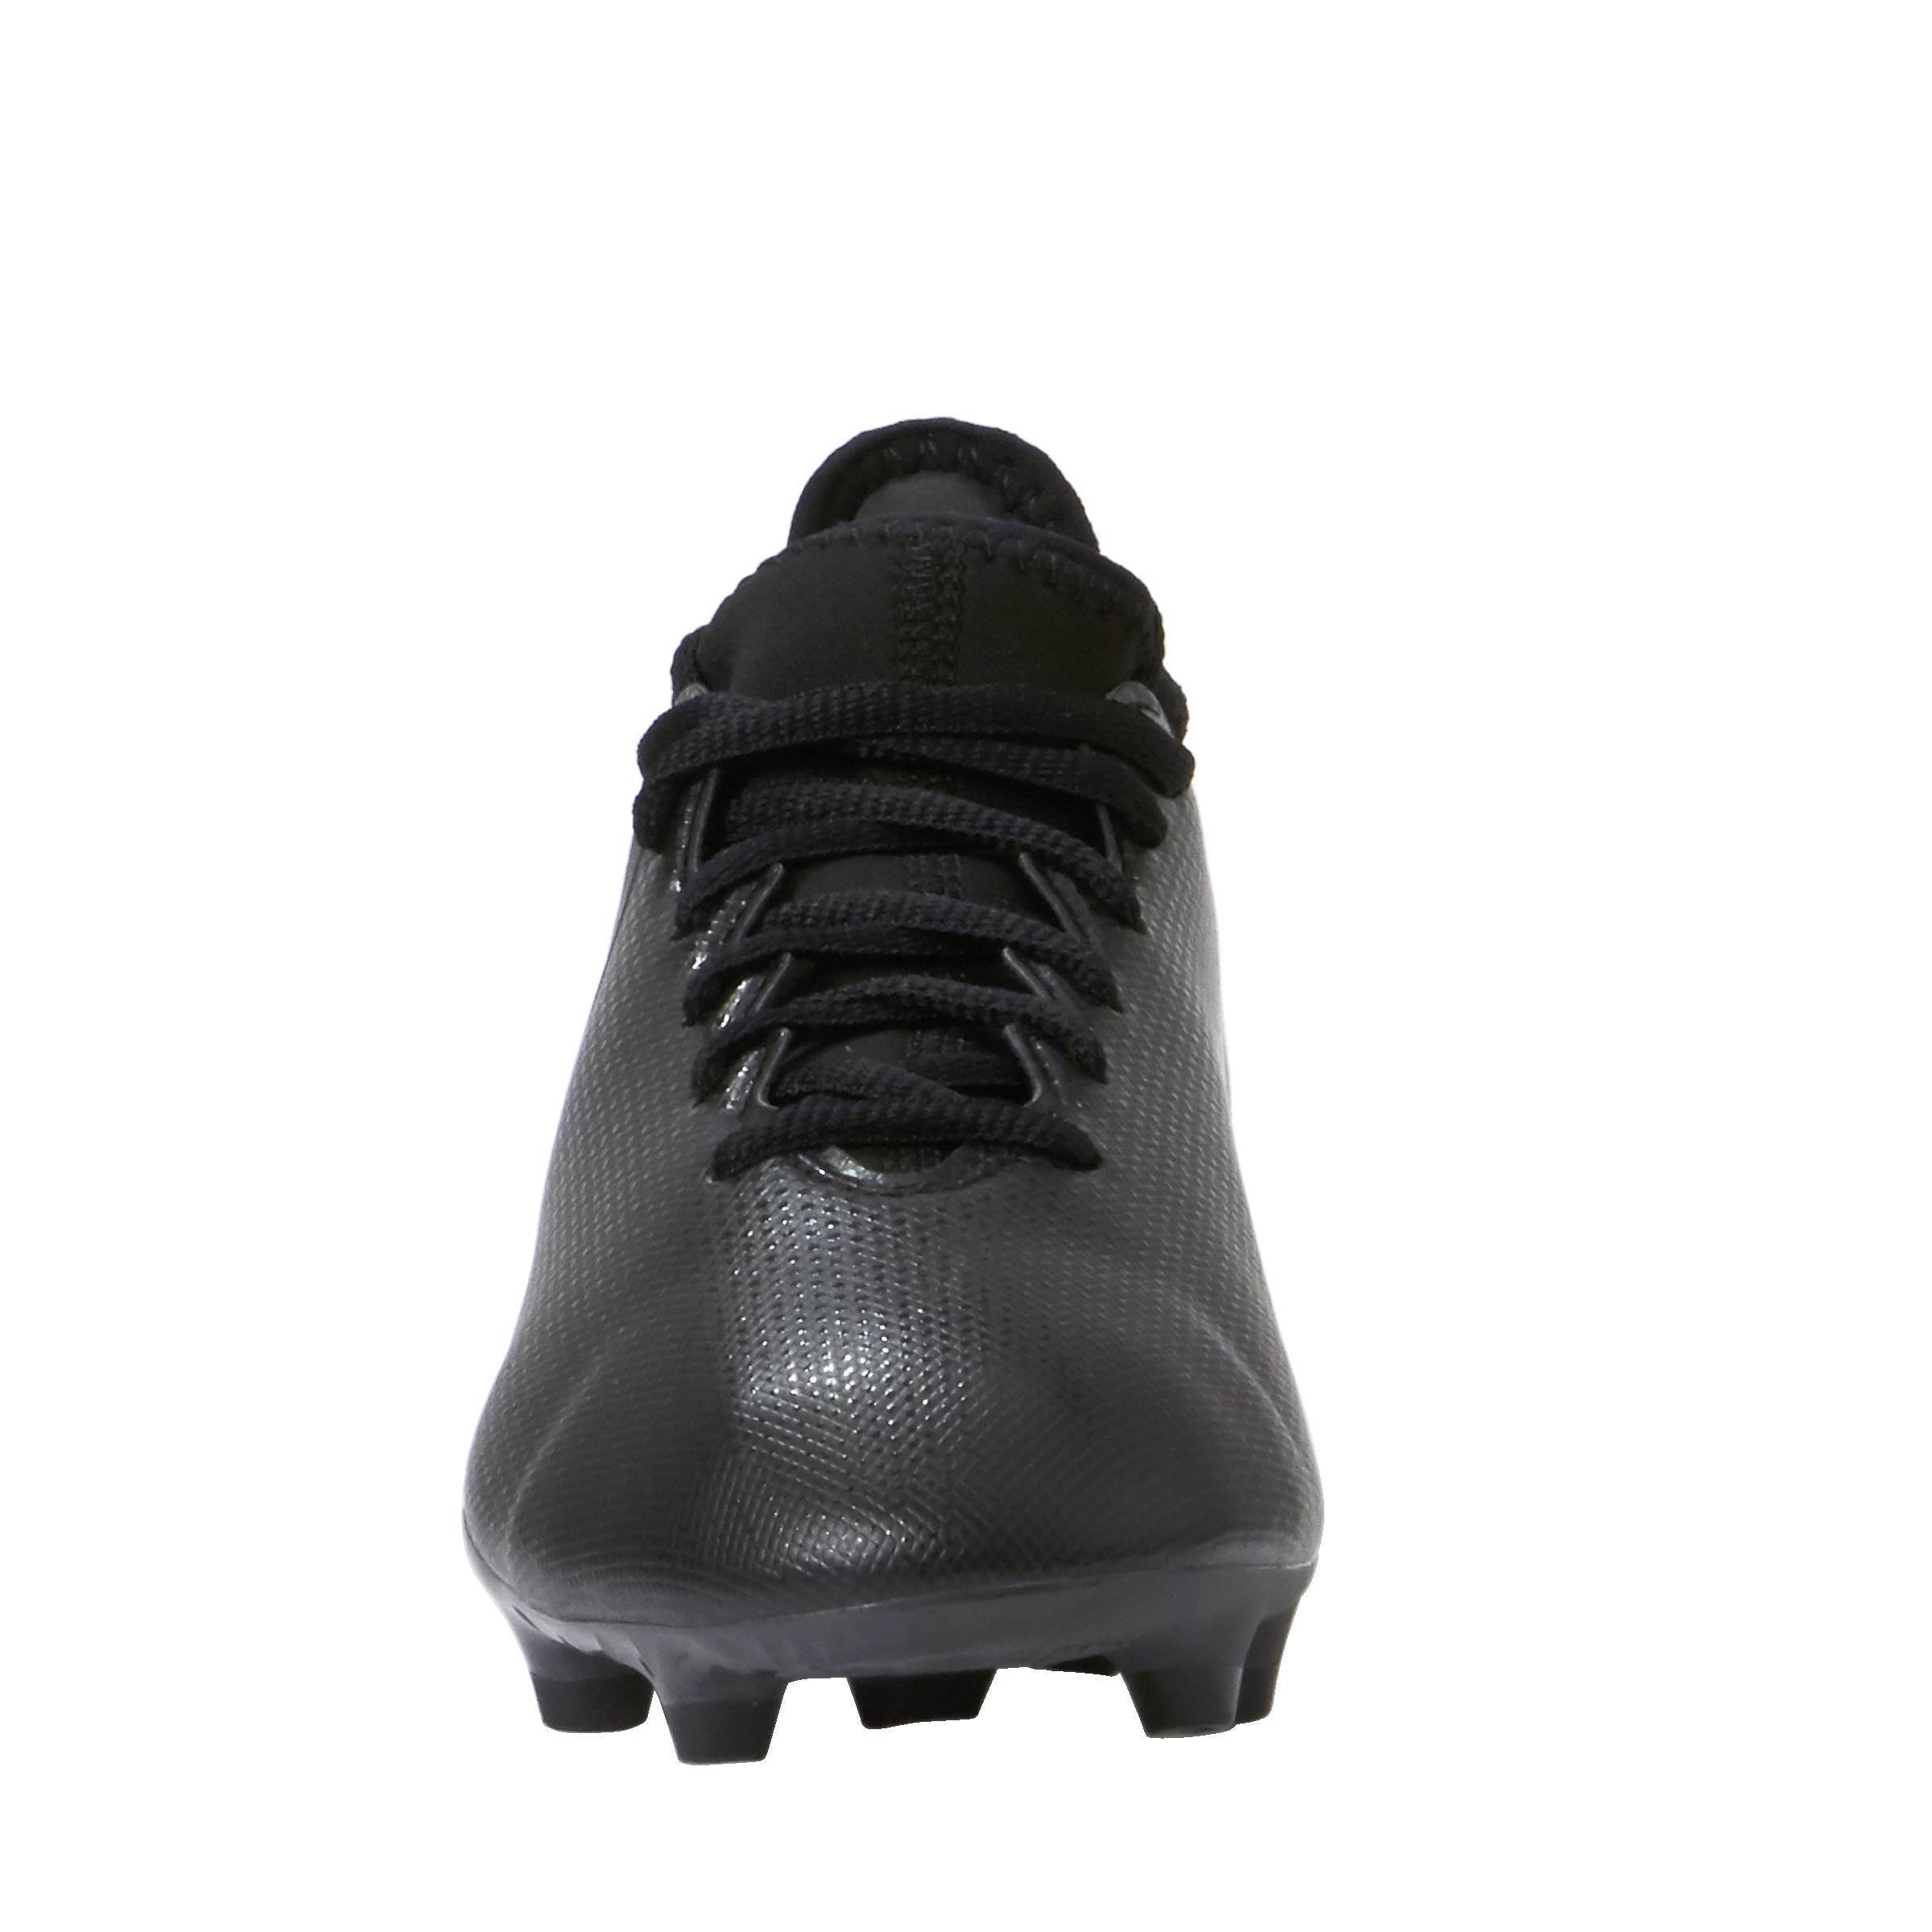 adidas x 17.3 fg voetbalschoenen zwart heren